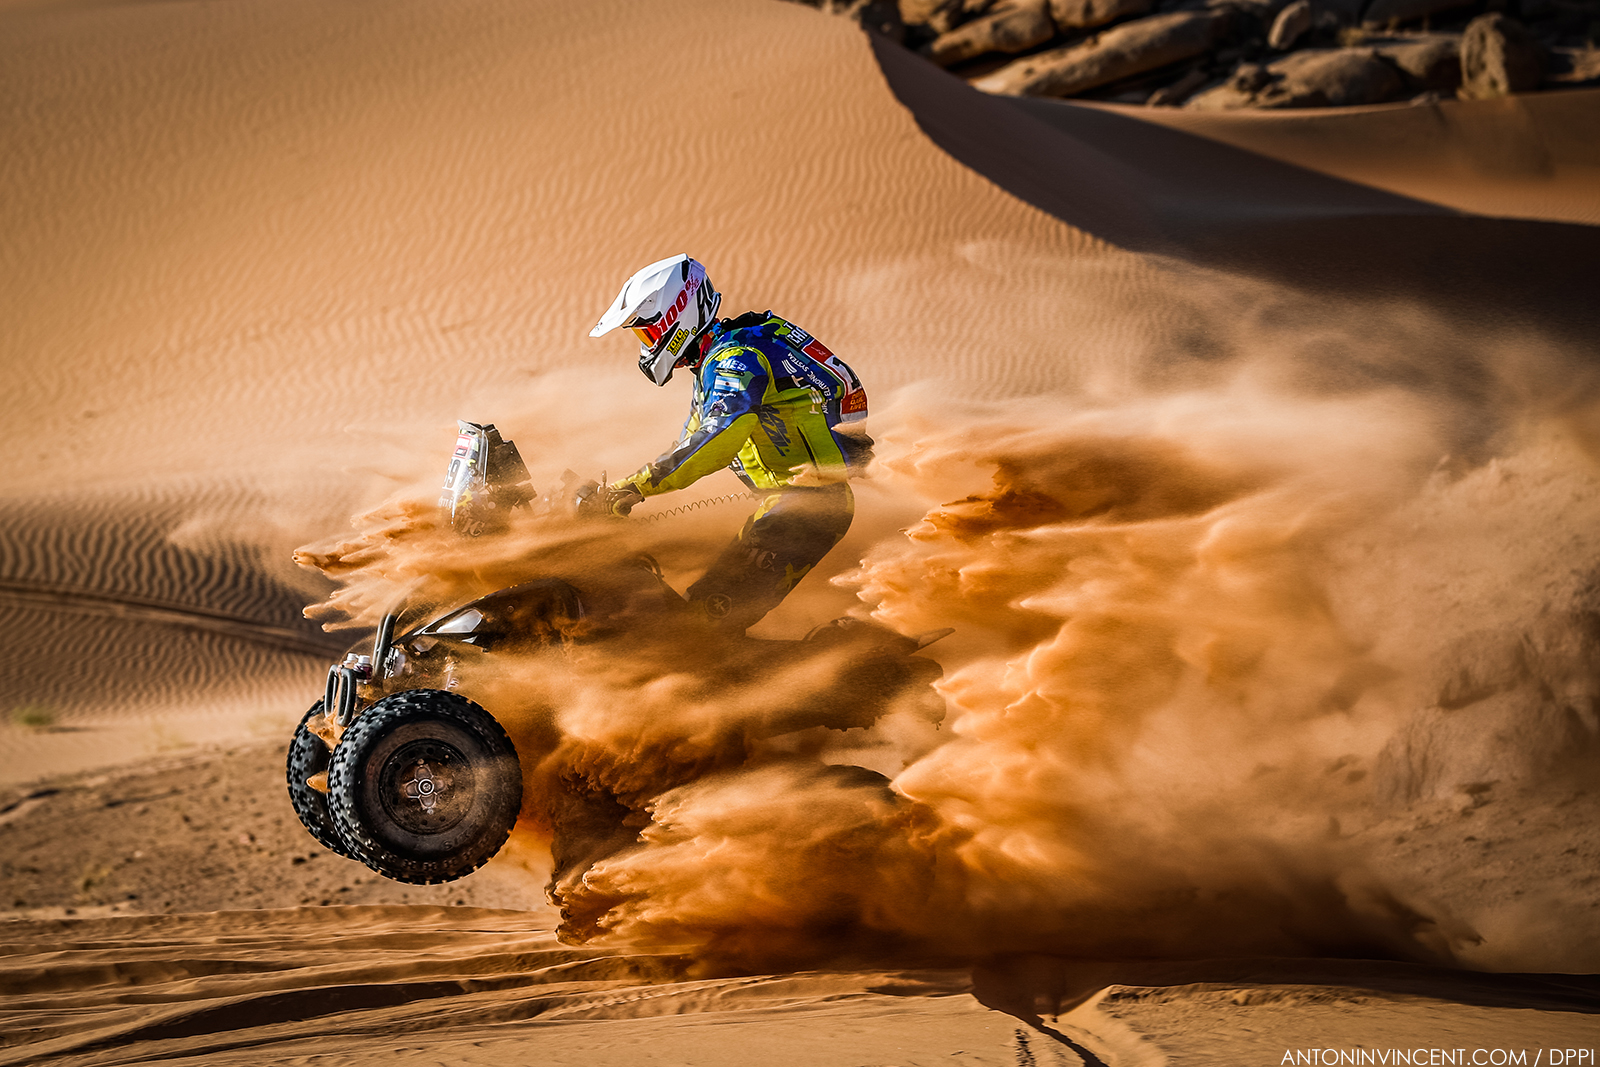 169 Carrizo Tobias Juan (arg), Yamaha M.E.D. Racing Team, Quad, action during the 2nd stage of the Dakar 2021 between Bisha and Wadi Al Dawasir, in Saudi Arabia on January 4, 2021 - Photo Antonin Vincent / DPPI